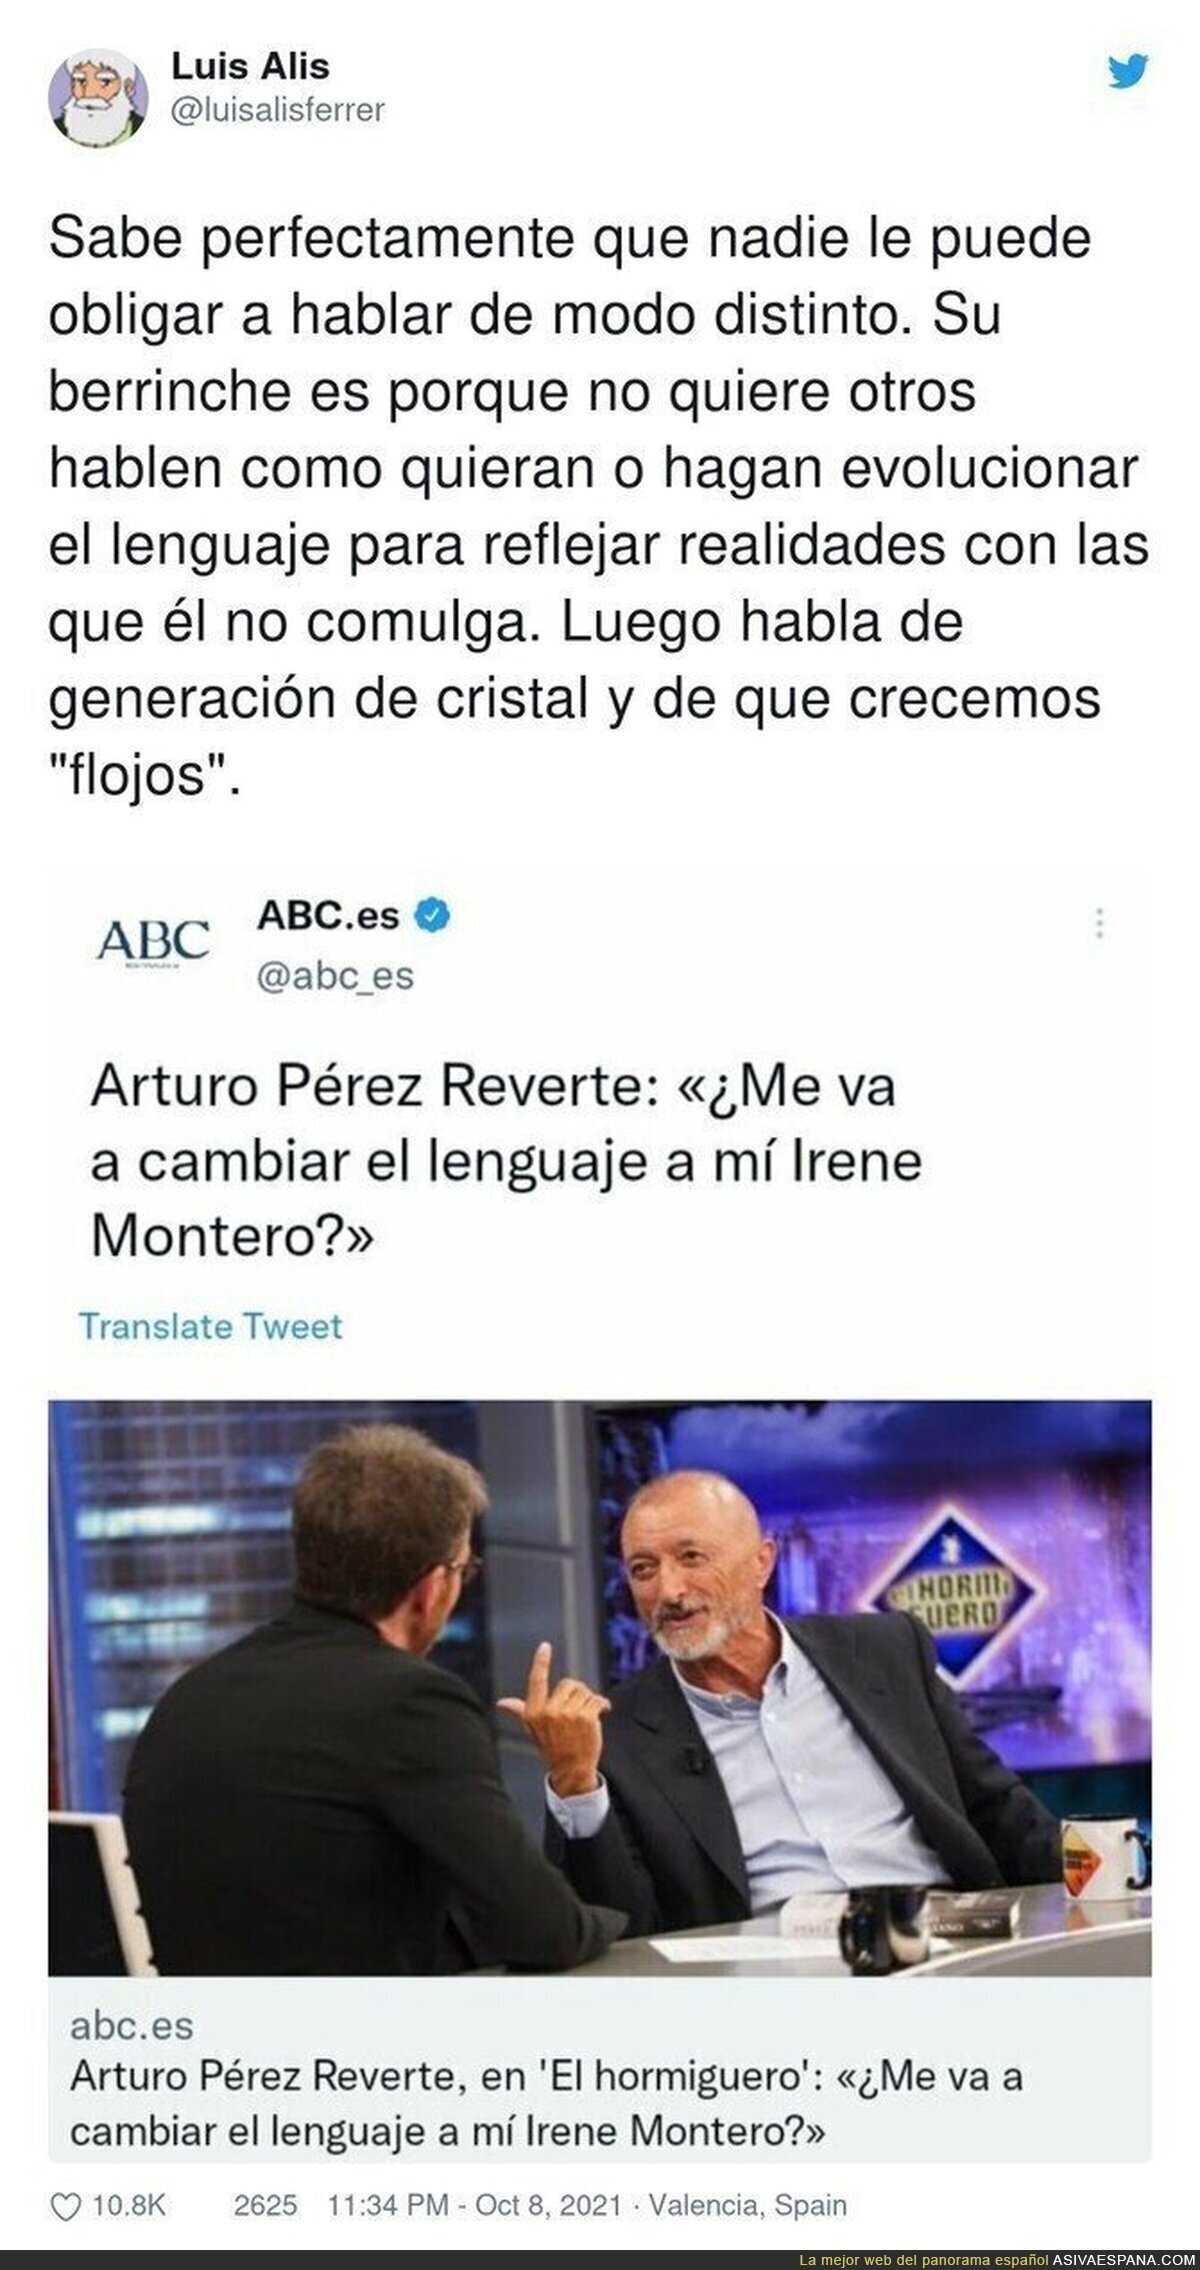 La rabieta lamentable de Arturo Pérez-Reverte contra Irene Montero buscando el aplauso fácil